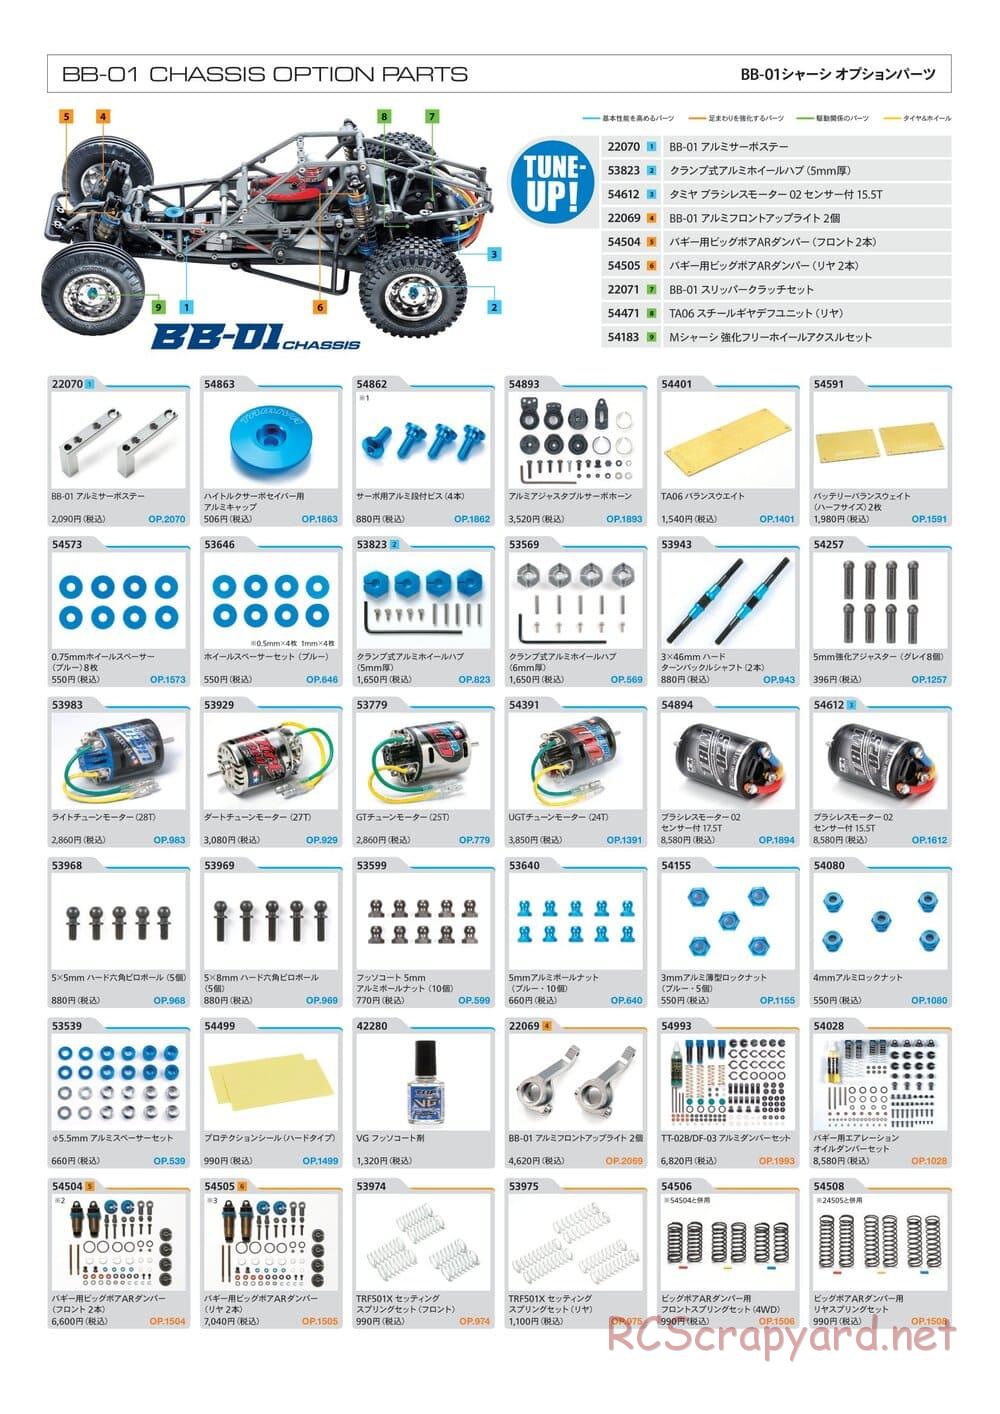 Tamiya - BBX - BB-01 Chassis - pqrts - Page 1